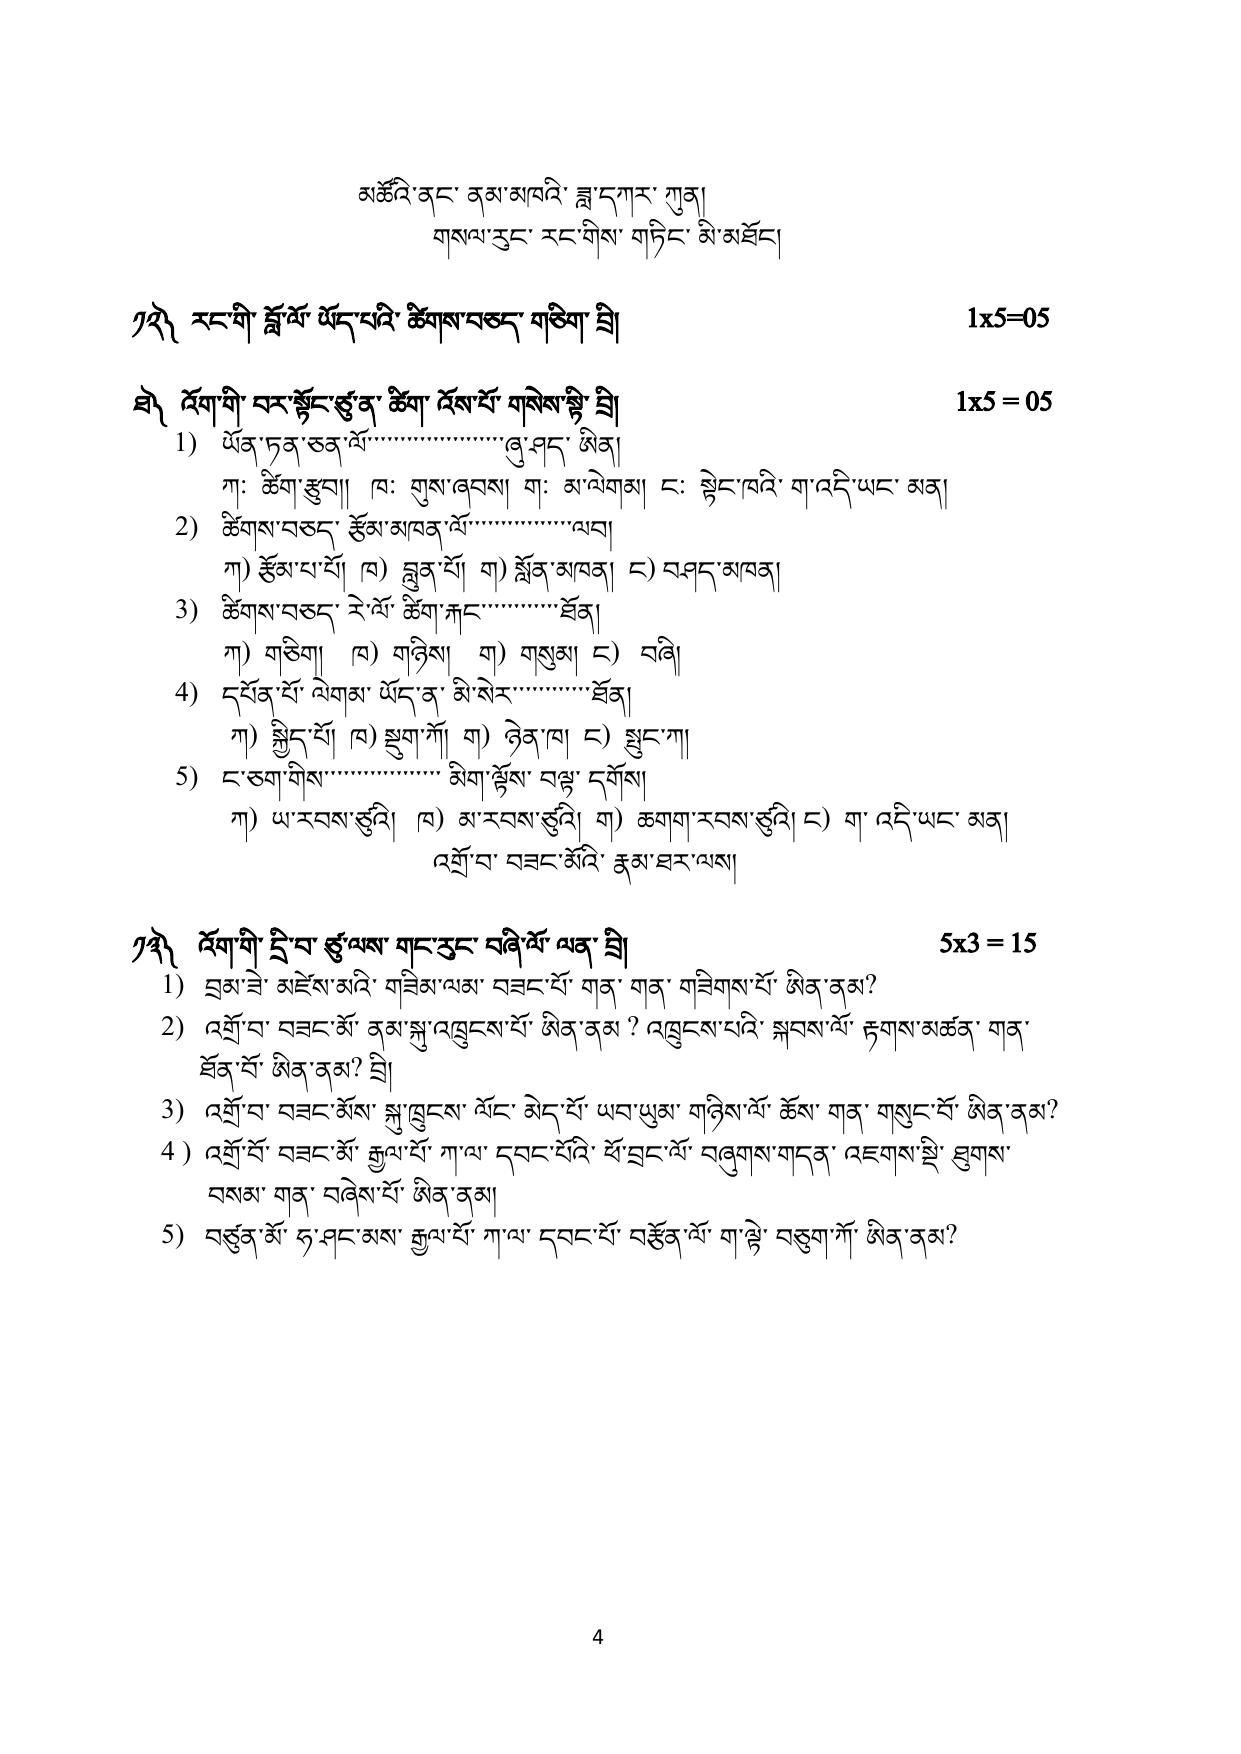 CBSE Class 12 Bhutia-Sample Paper 2018-19 - Page 4